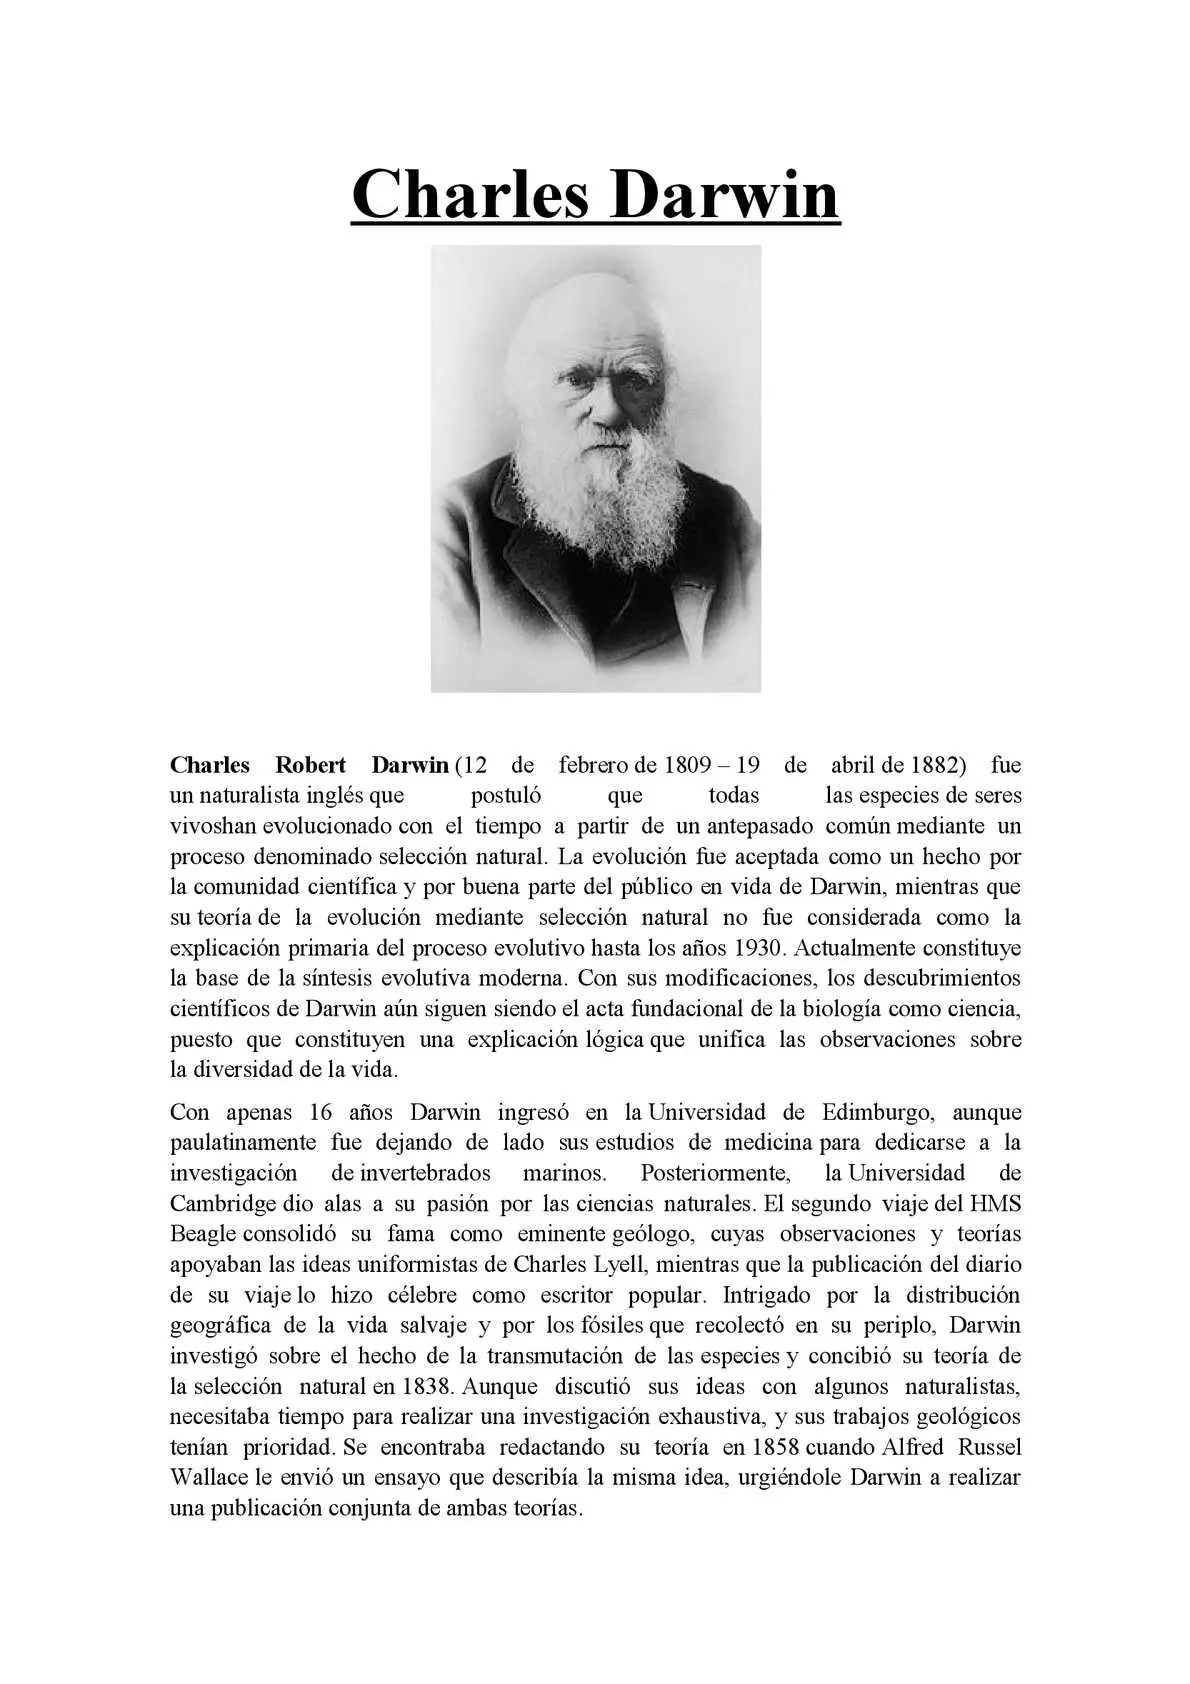 autobiografia de charles darwin resumen - Cuántas páginas tiene la autobiografía de Charles Darwin